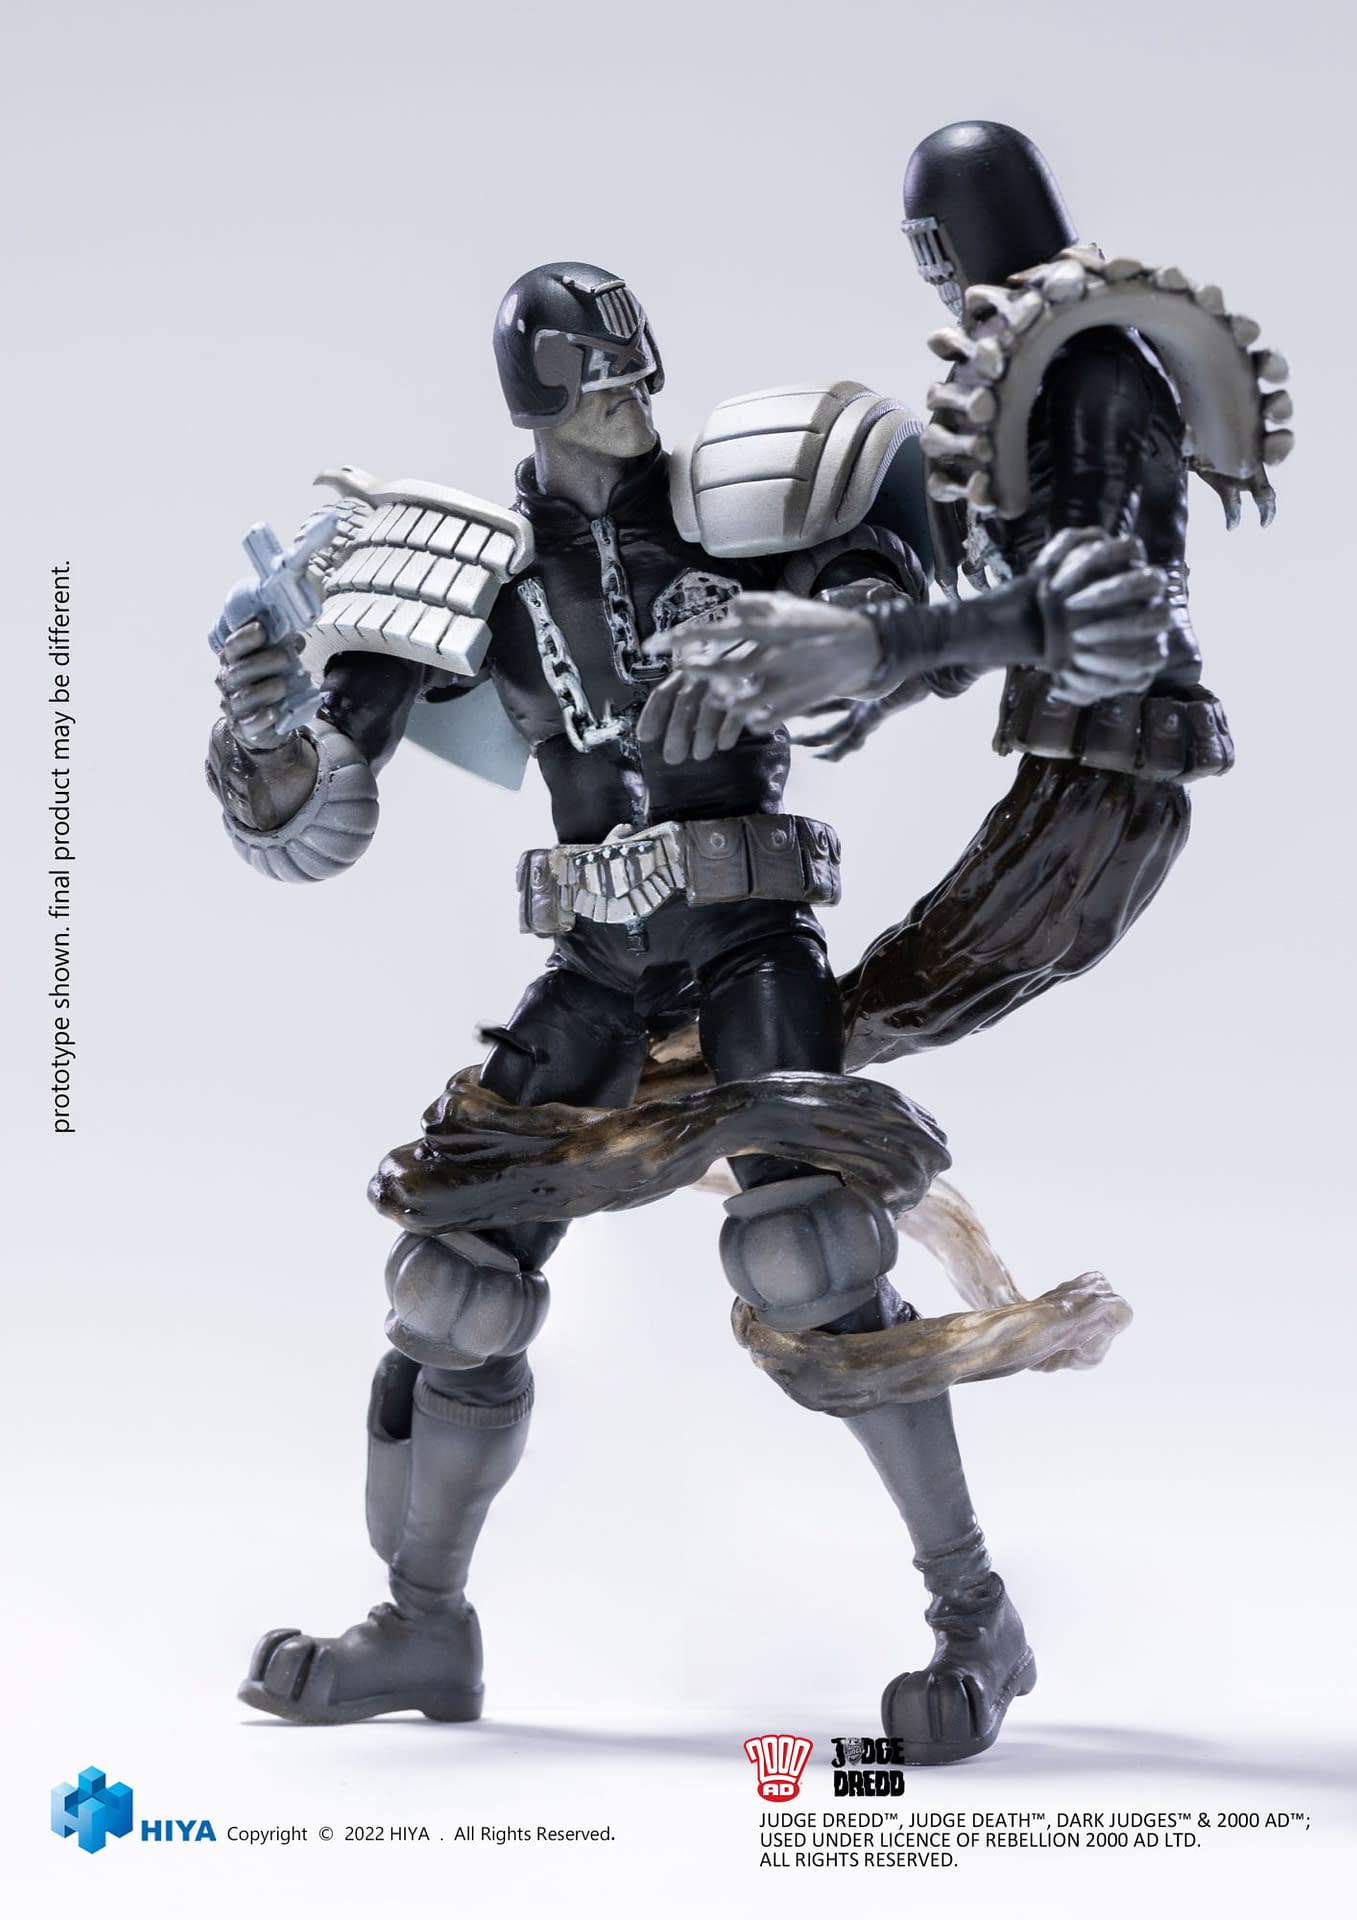 Hiya Toys Debuts Judge Dredd and RoboCop SDCC 22' Exclusive Figures